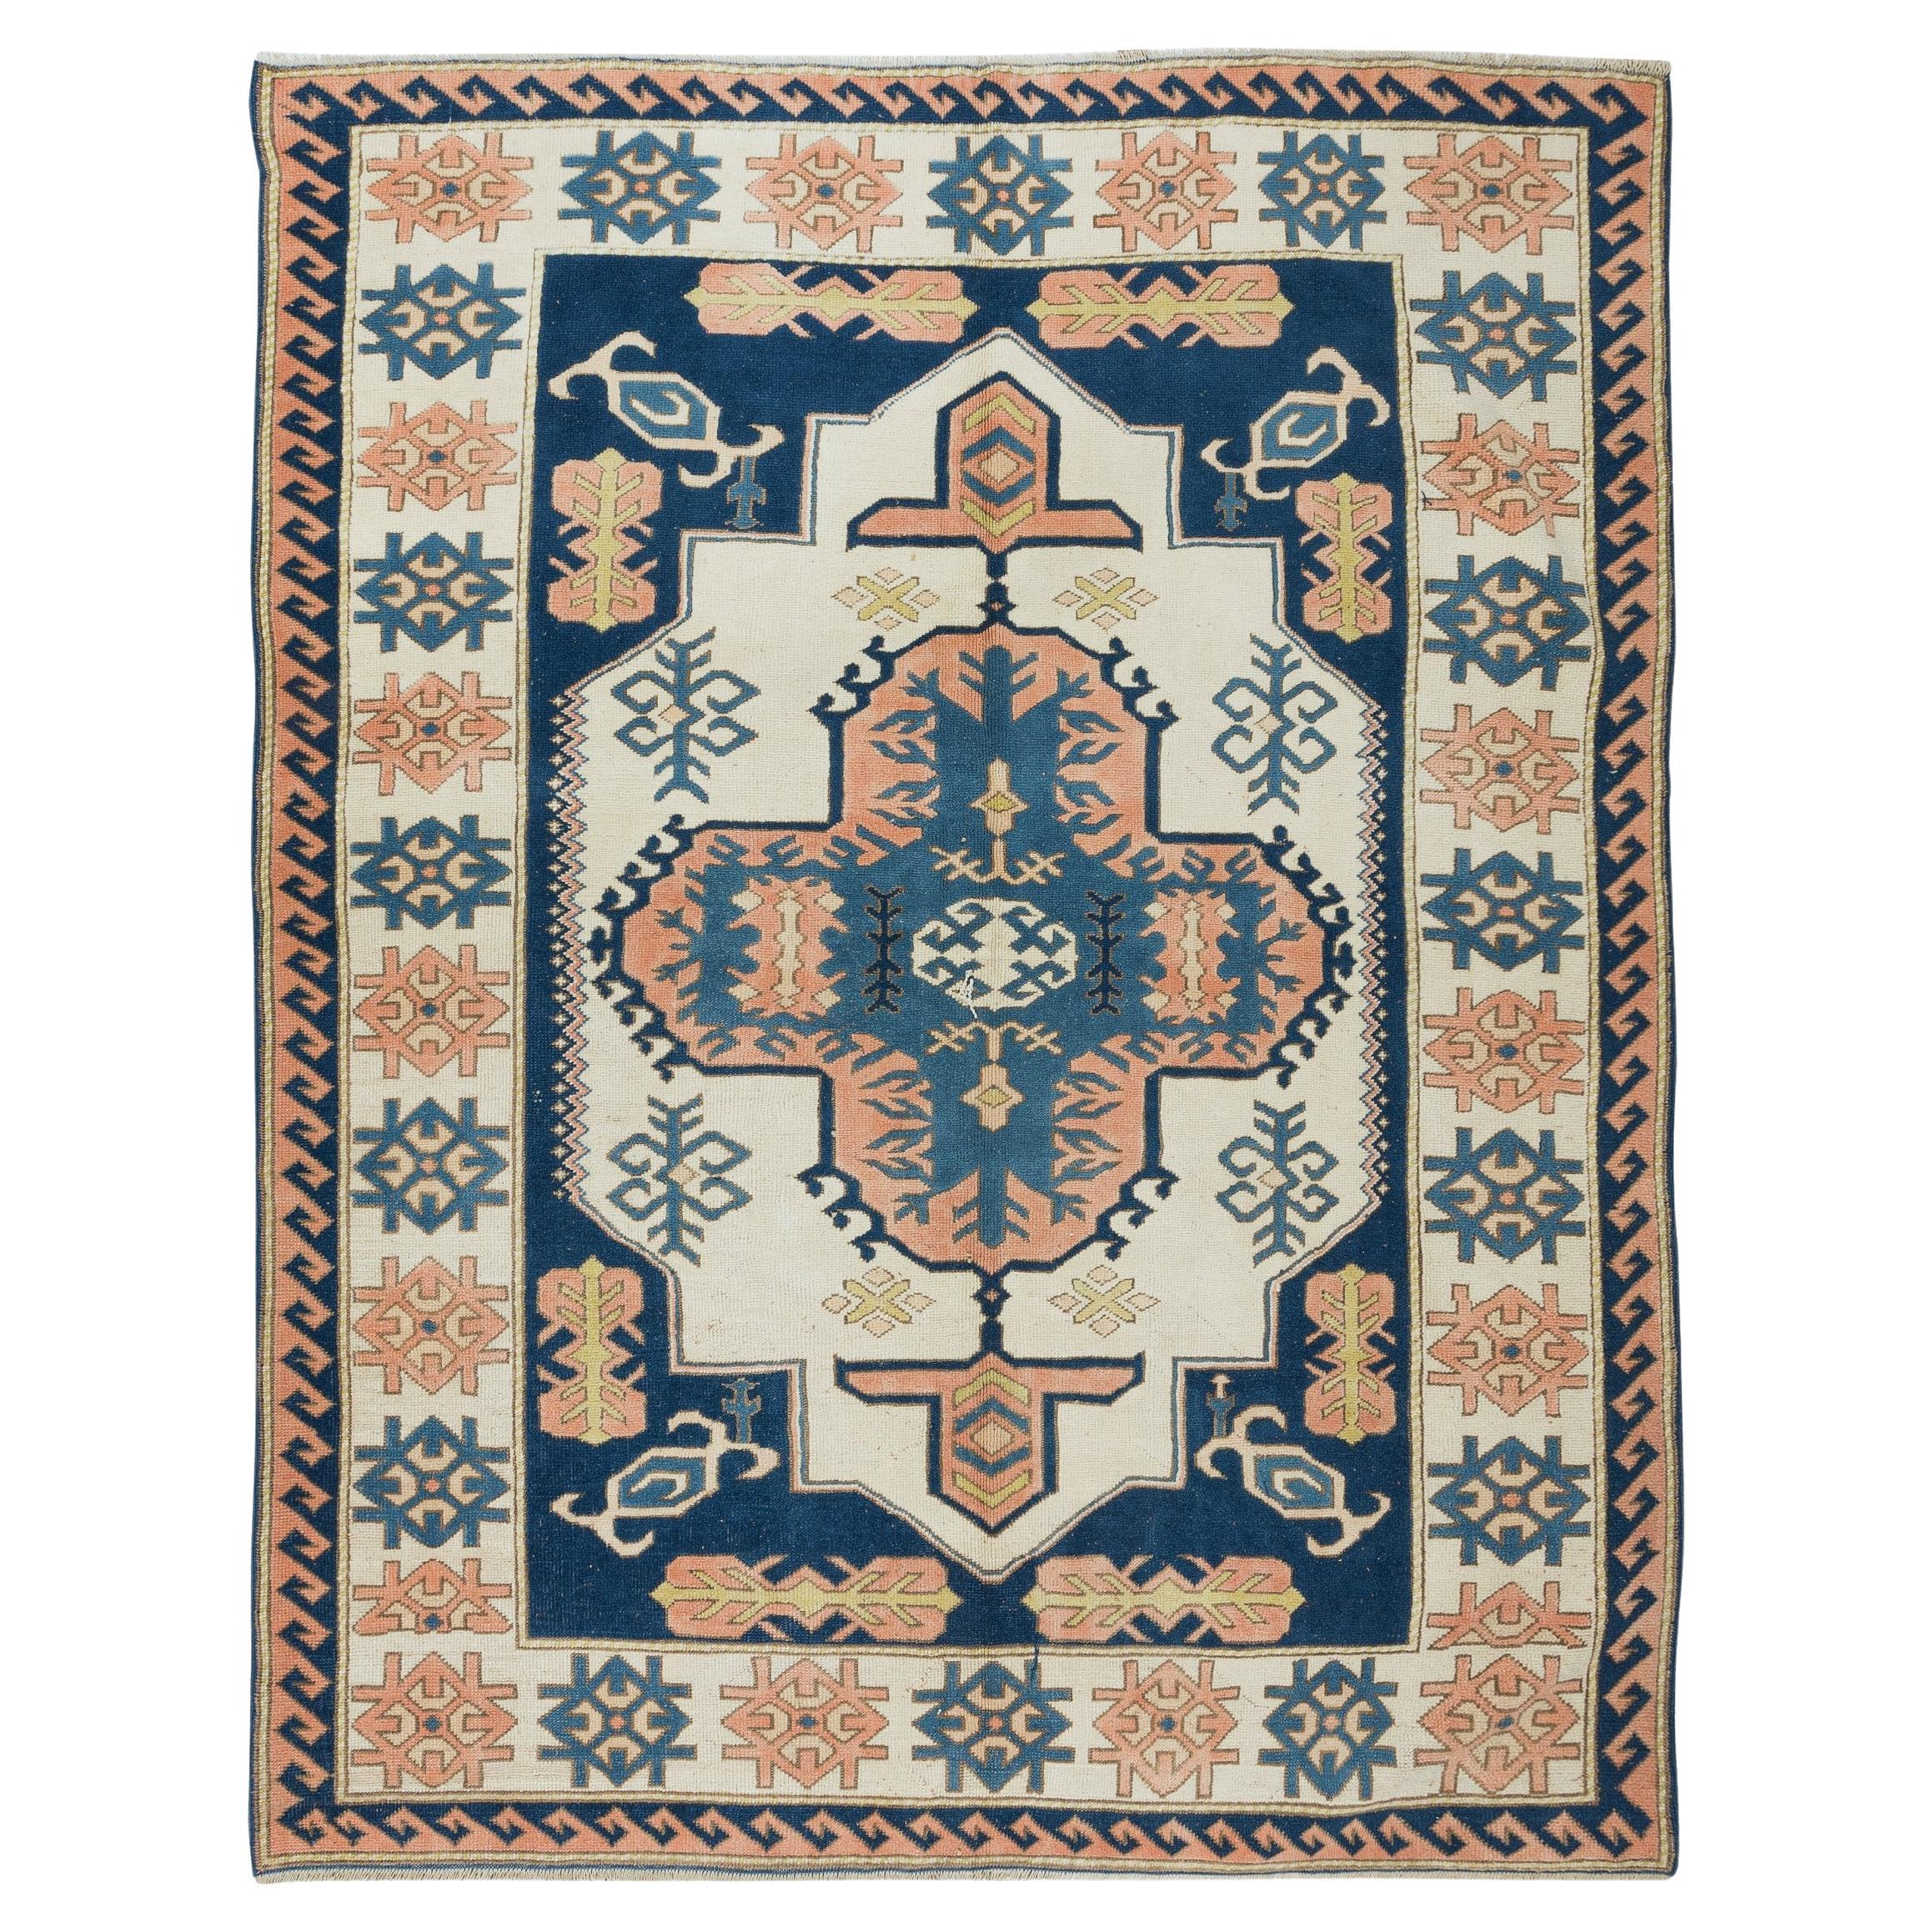 7.3x9.2 Ft Contemporary Handmade Area Rug, Vintage Geometric Carpet, All Wool